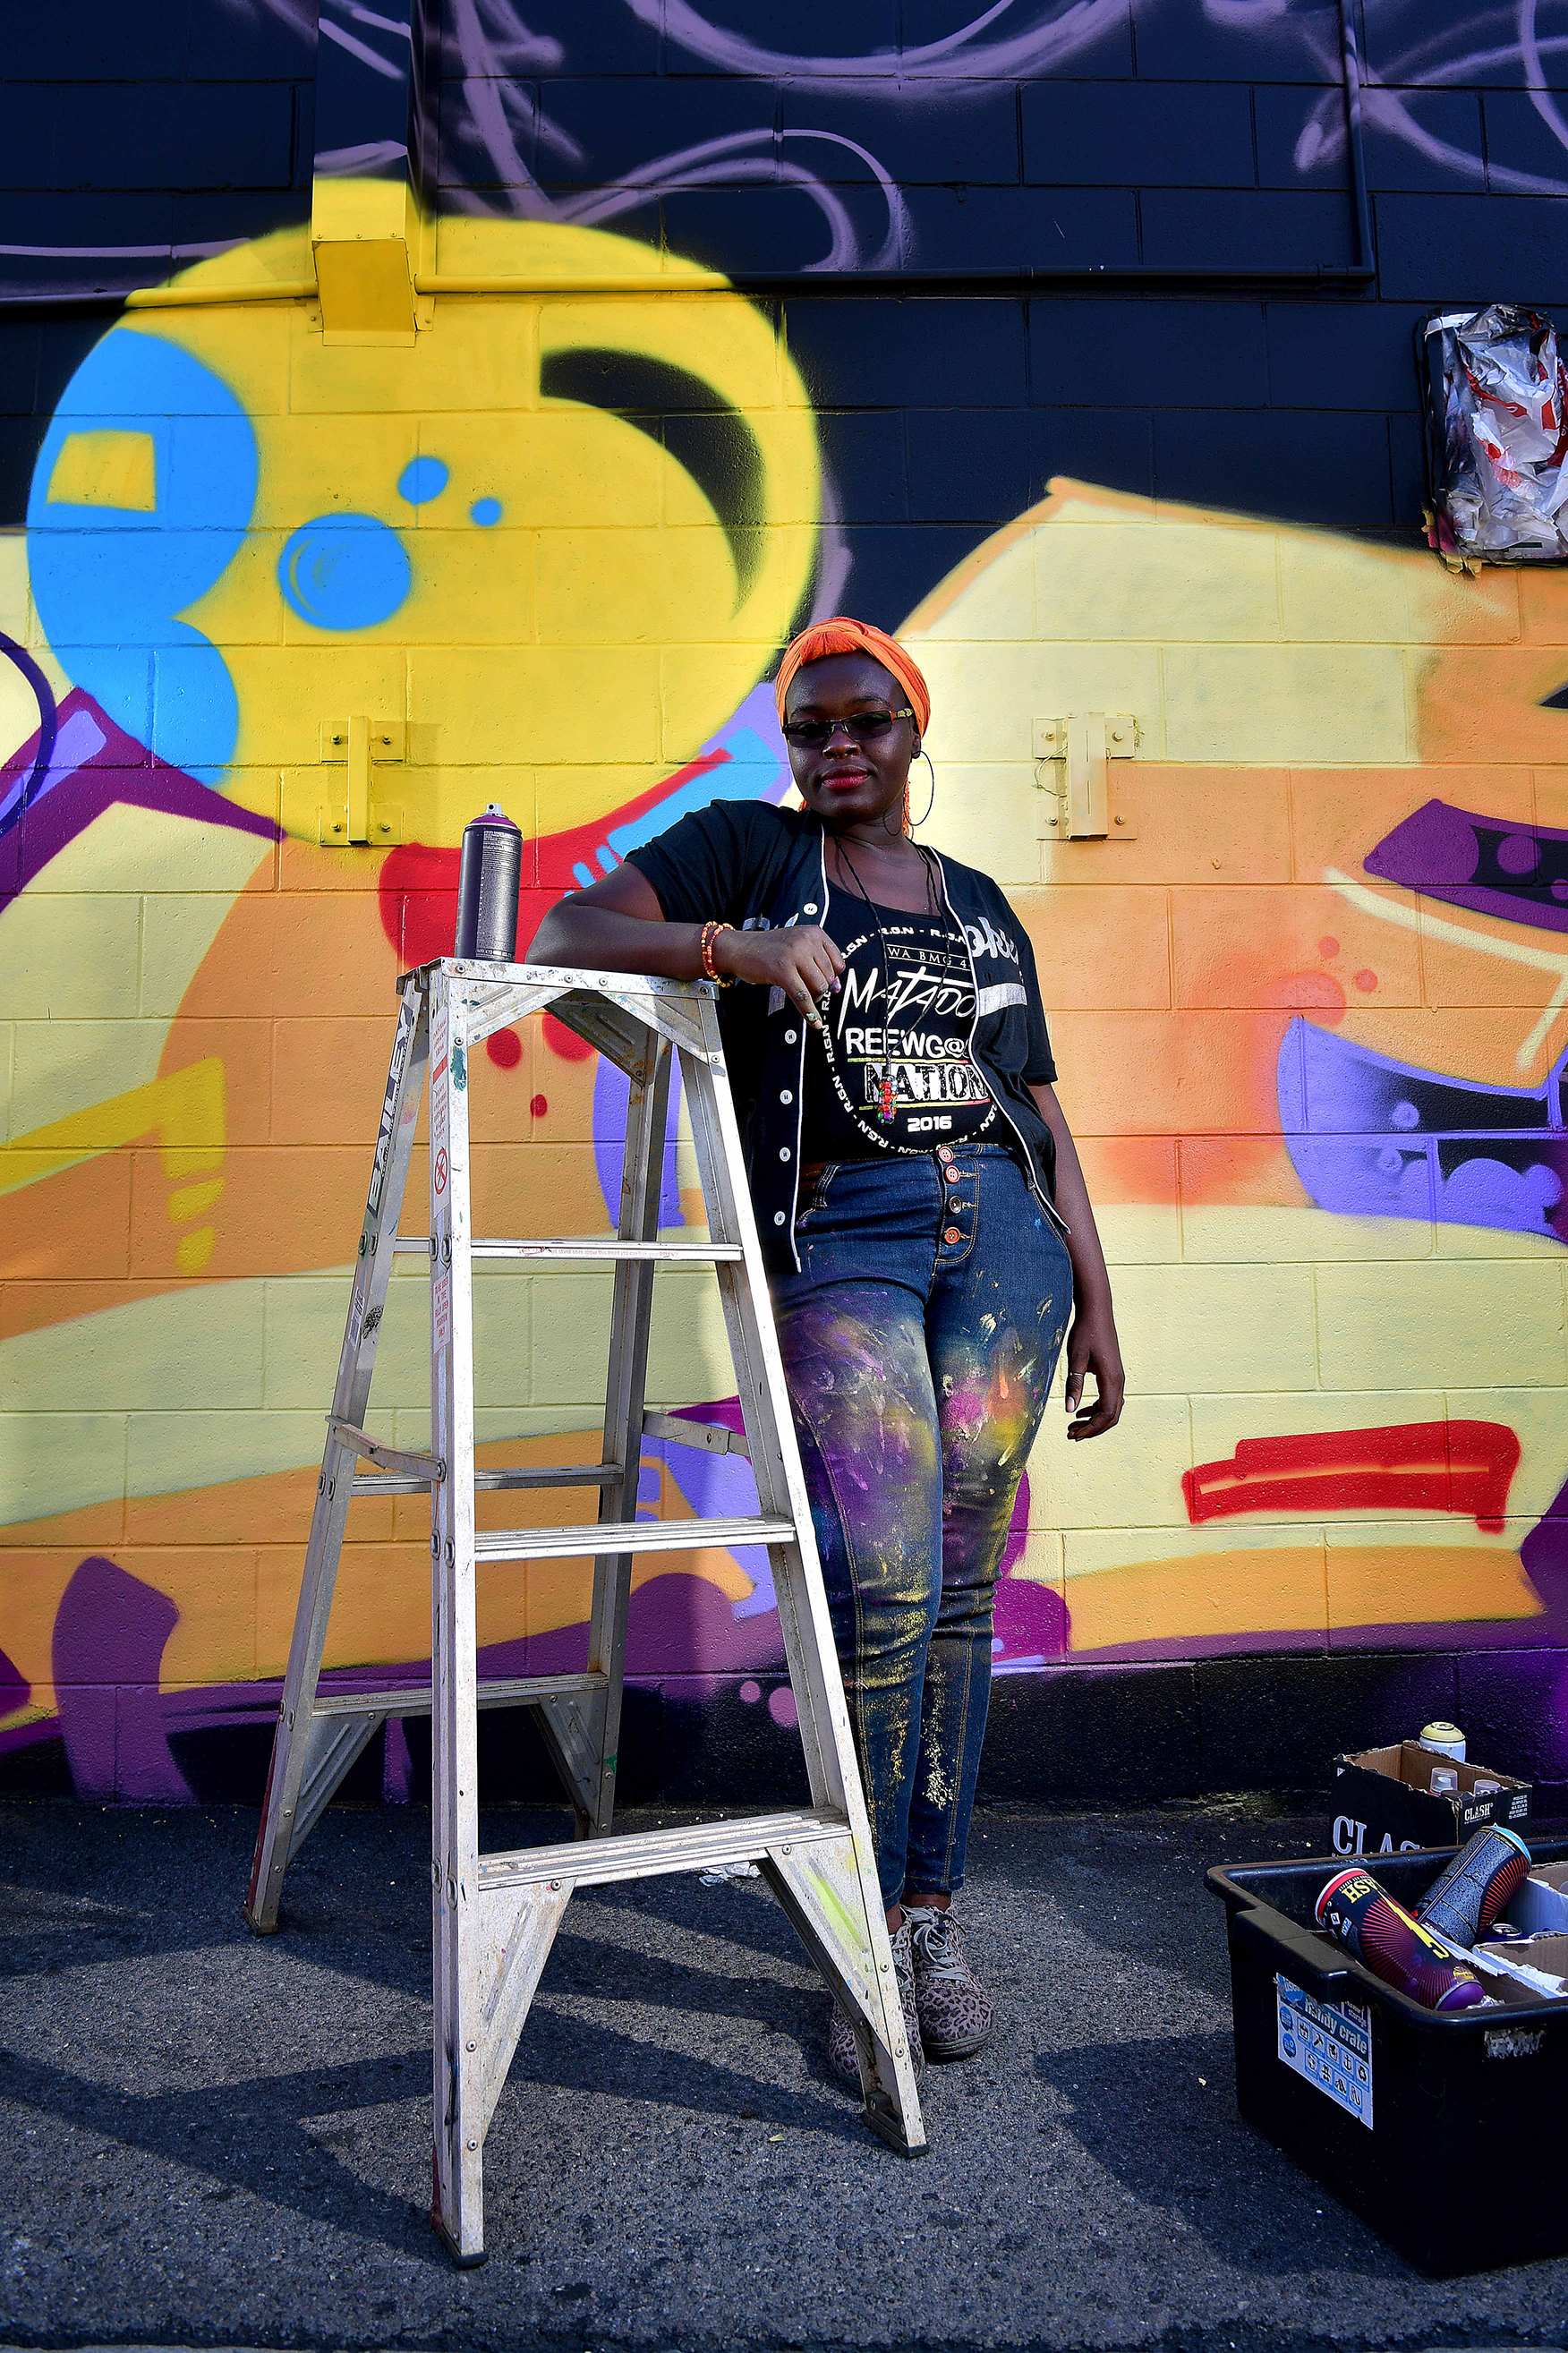 CHP_Export_173786172_Zeinixx is West  Africa's first graffiti artist visiting Adelaide for an Africa.jpg